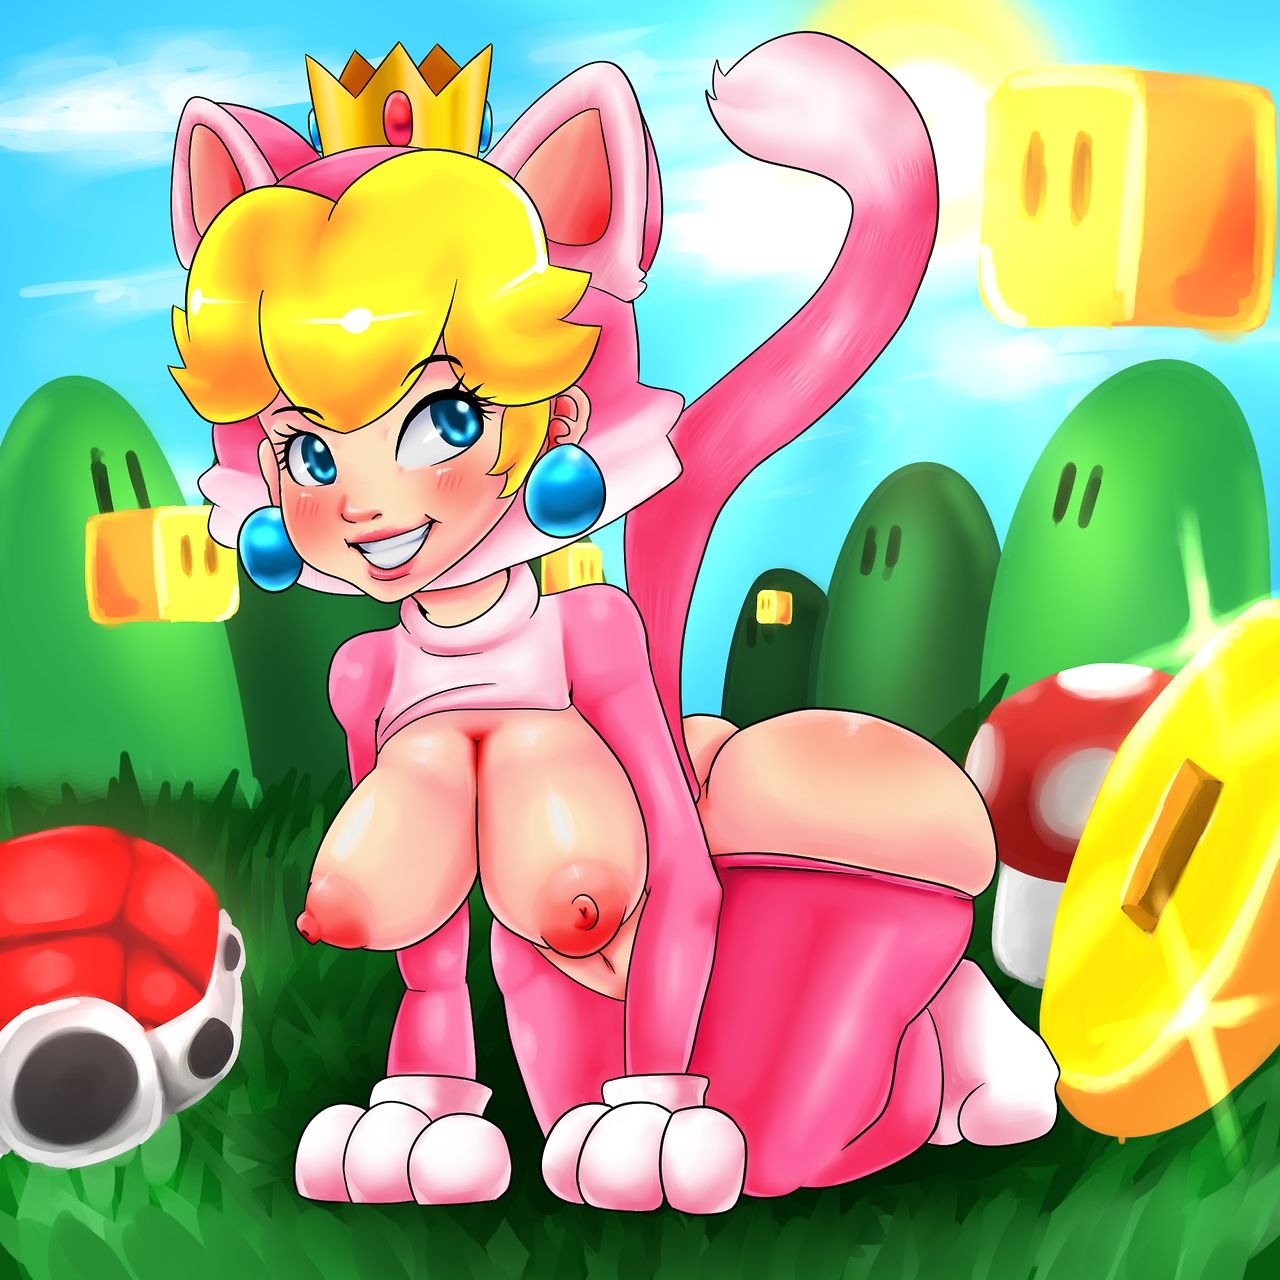 Princess Peach: Dirty Princess (UPDATED) 43